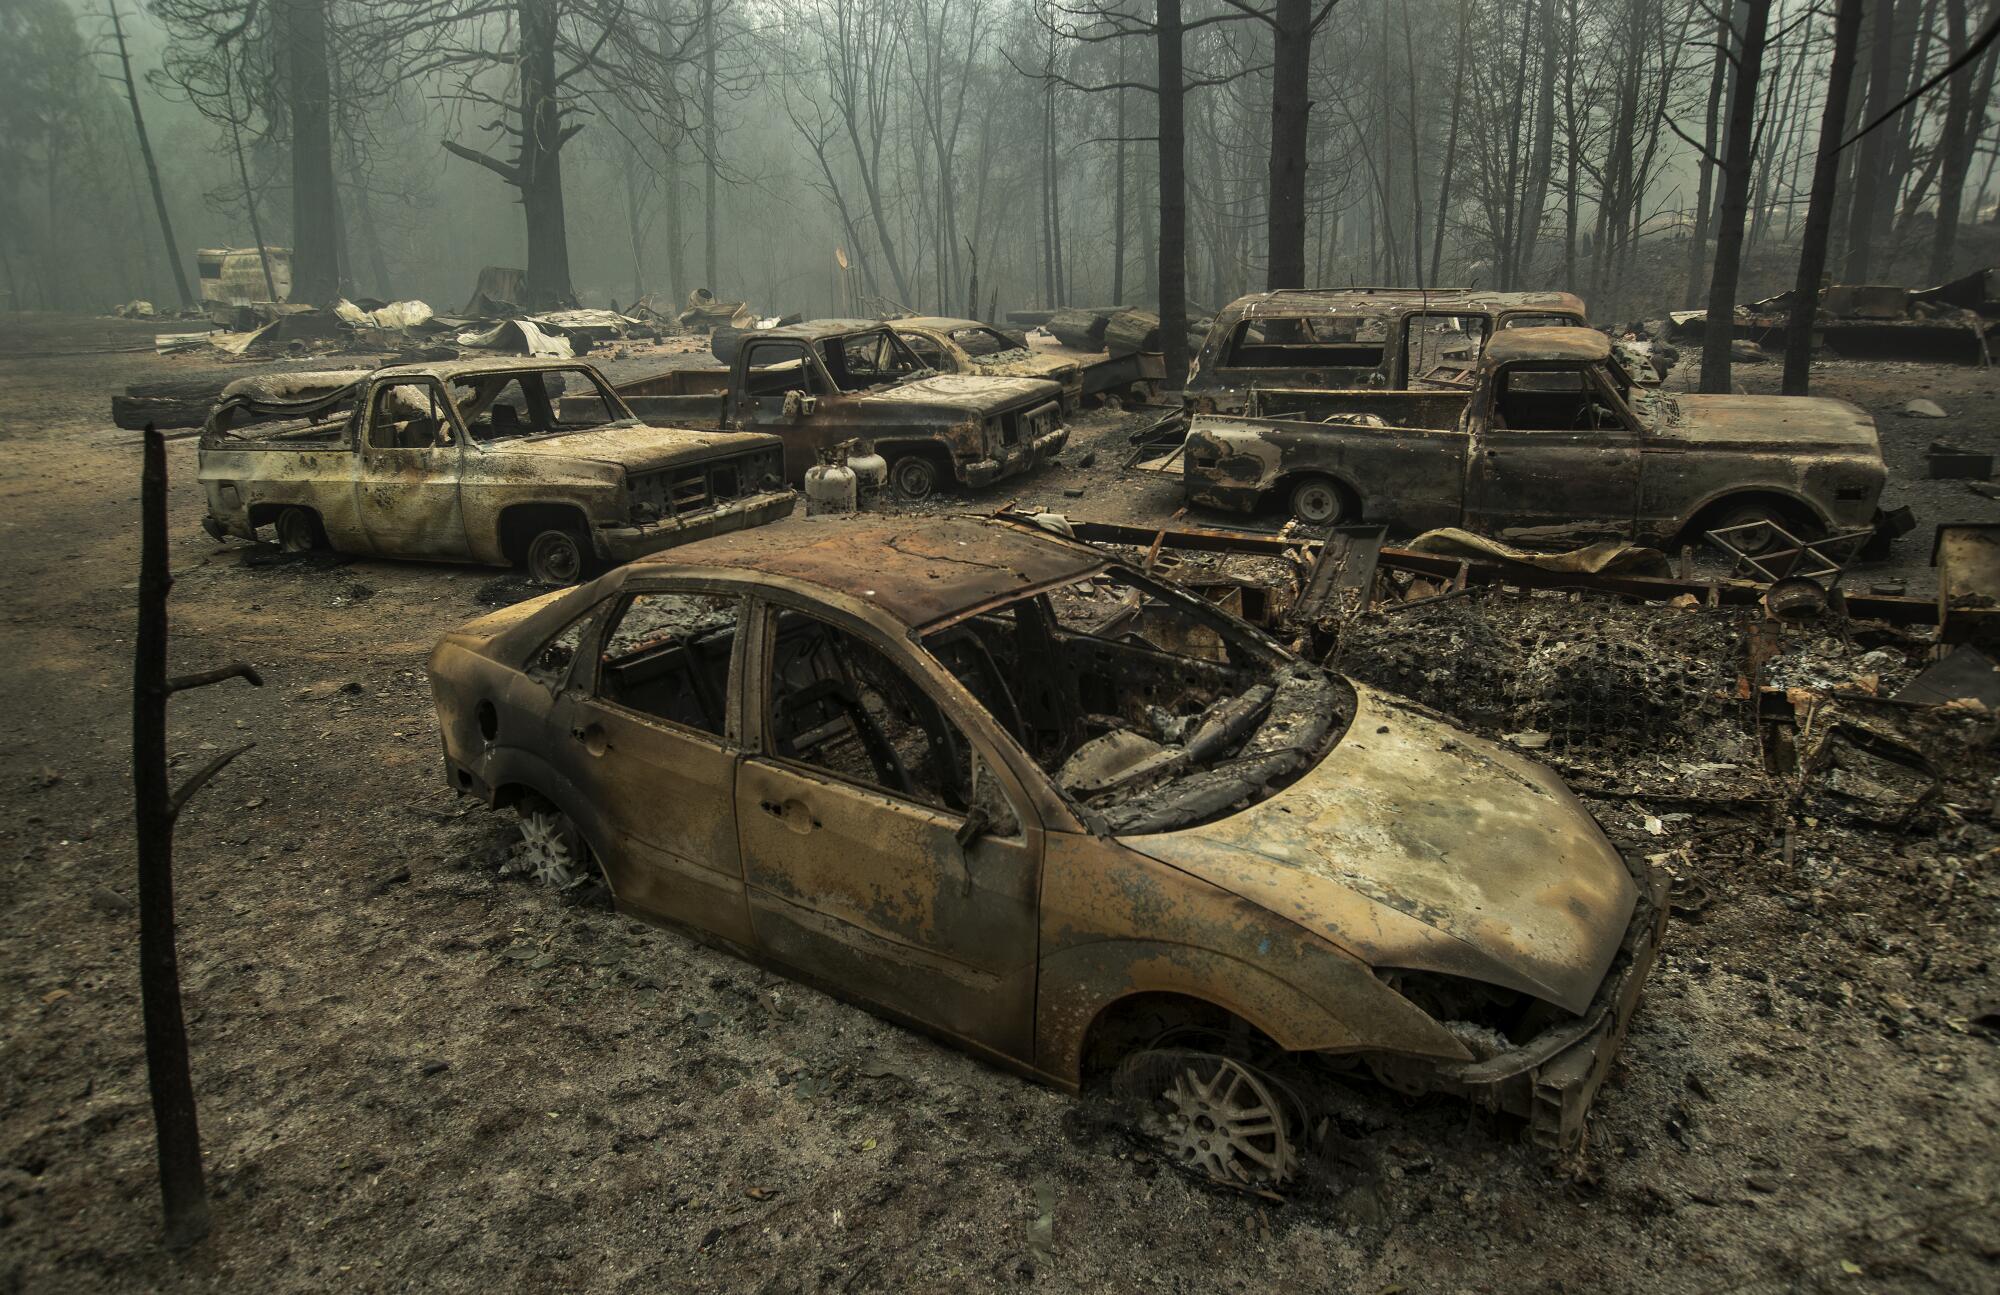 Rows of burned cars sit amid blackened trees.